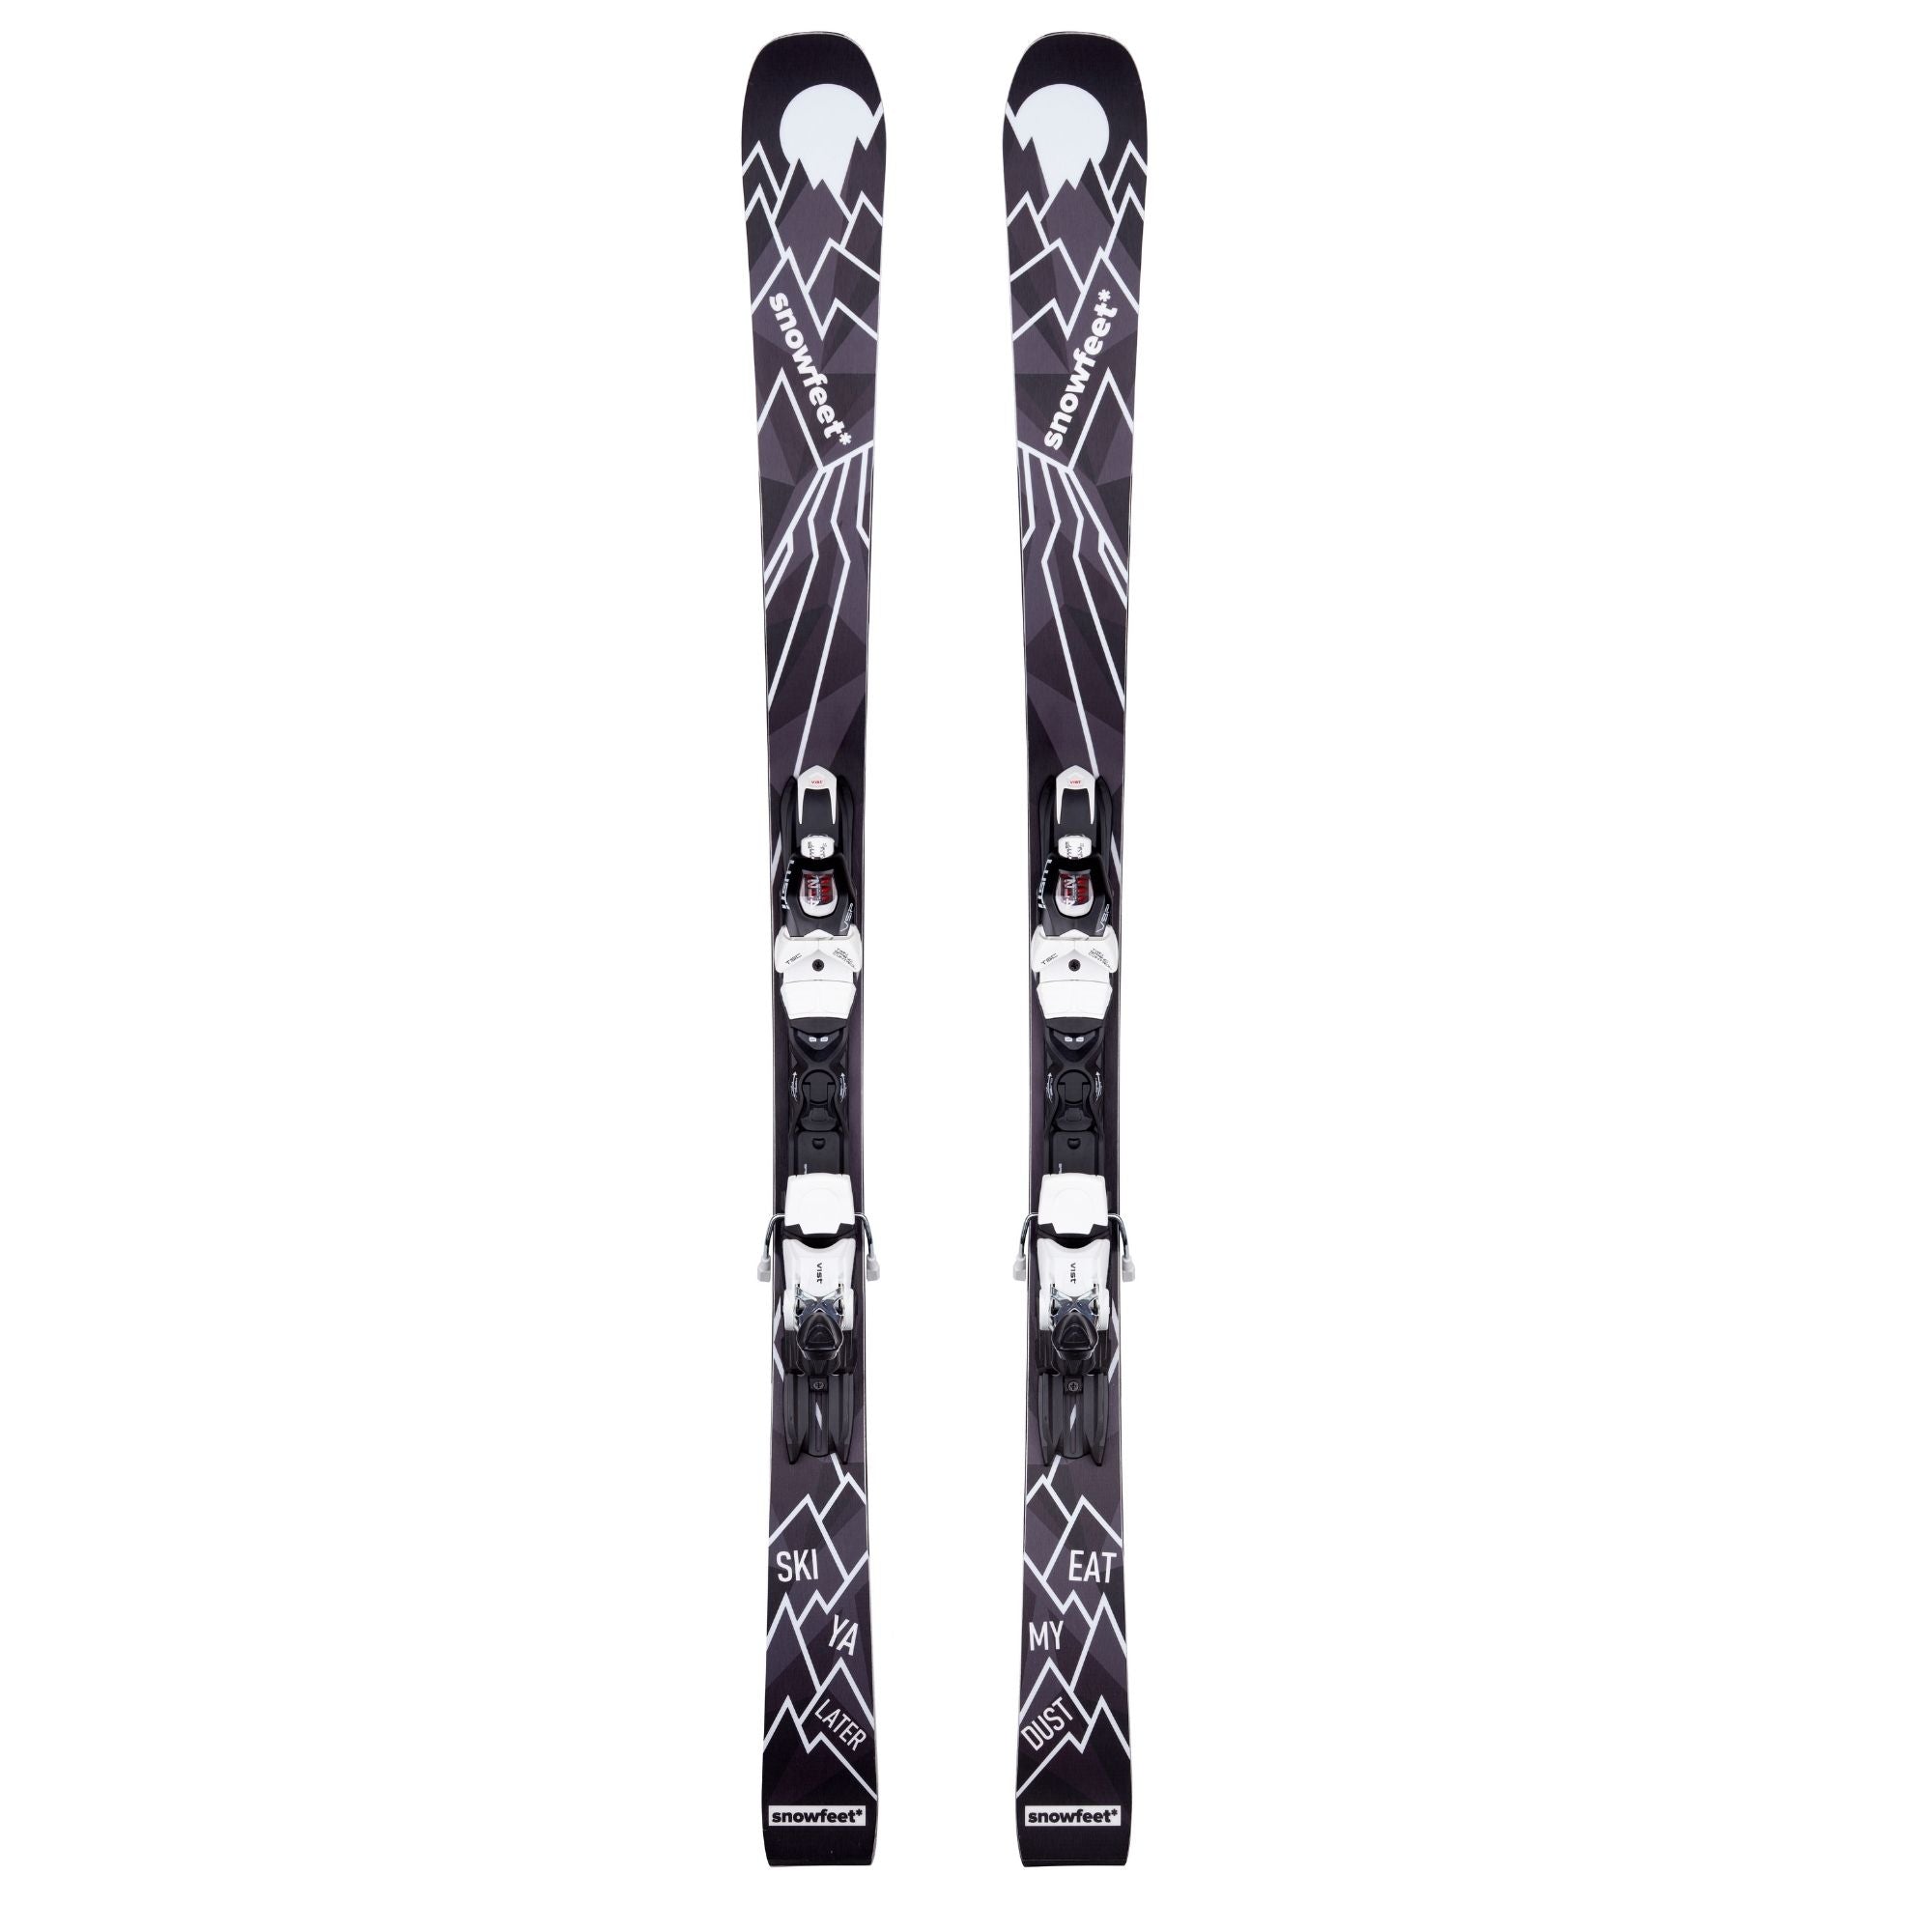 Snowfeet Skis 156 cm | Limited Edition - snowfeet*